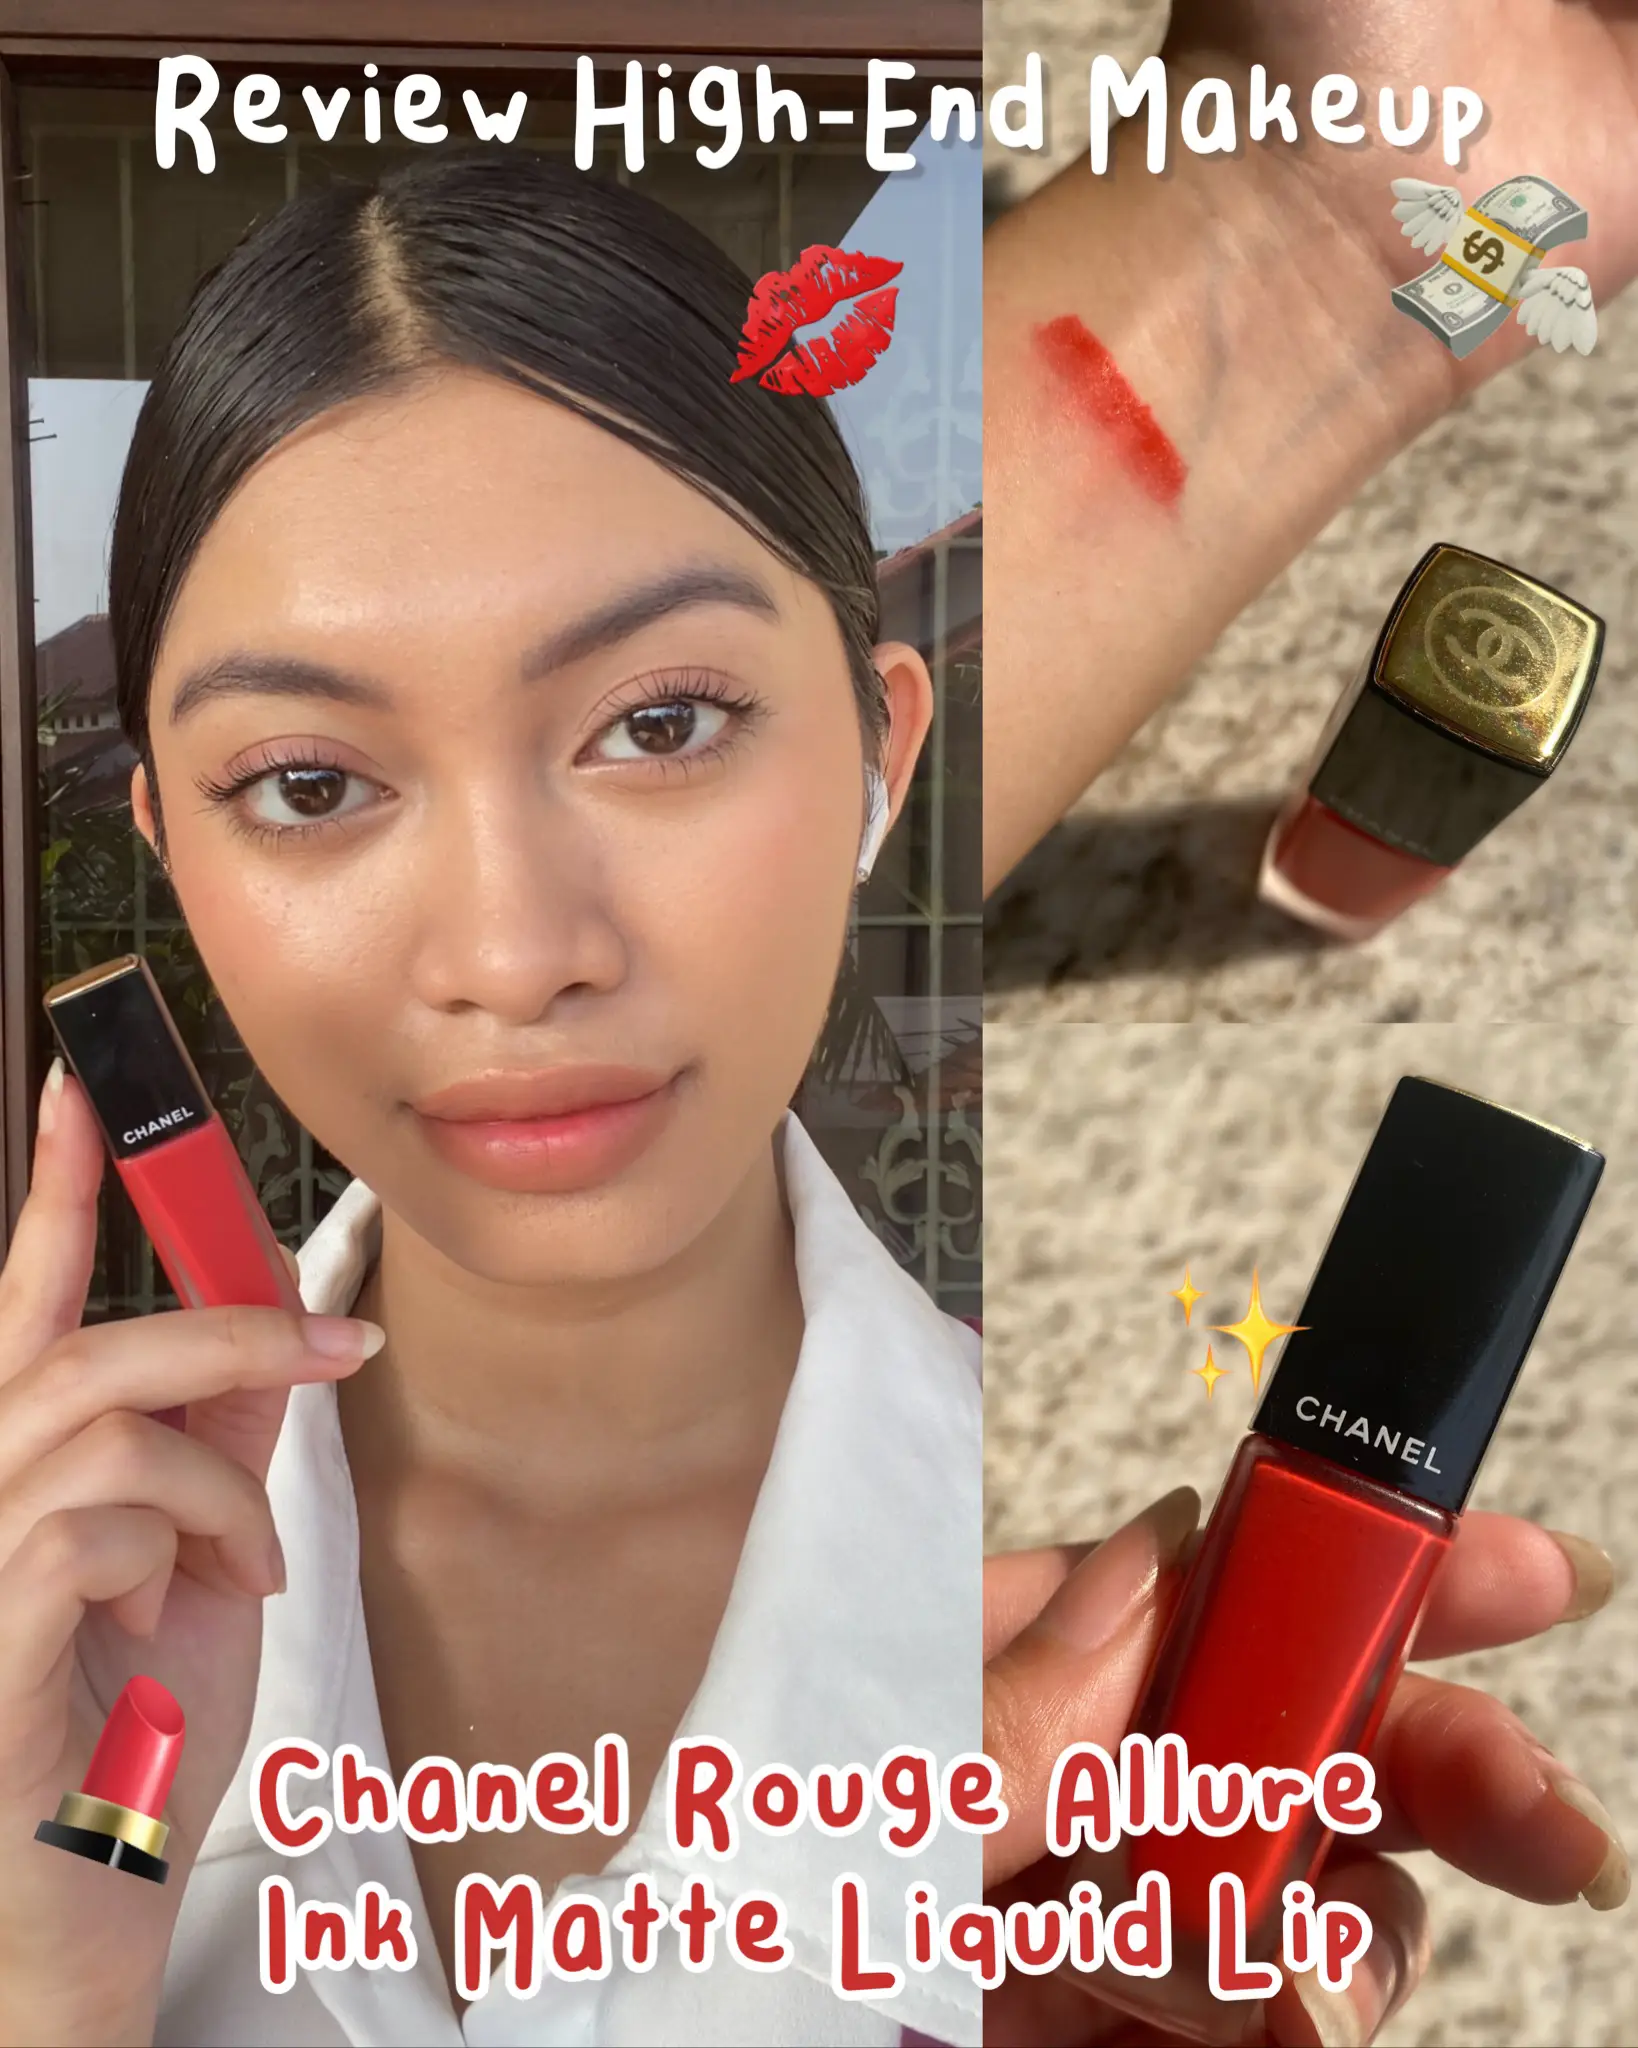 Review High-End Makeup: Chanel Liquid Lip